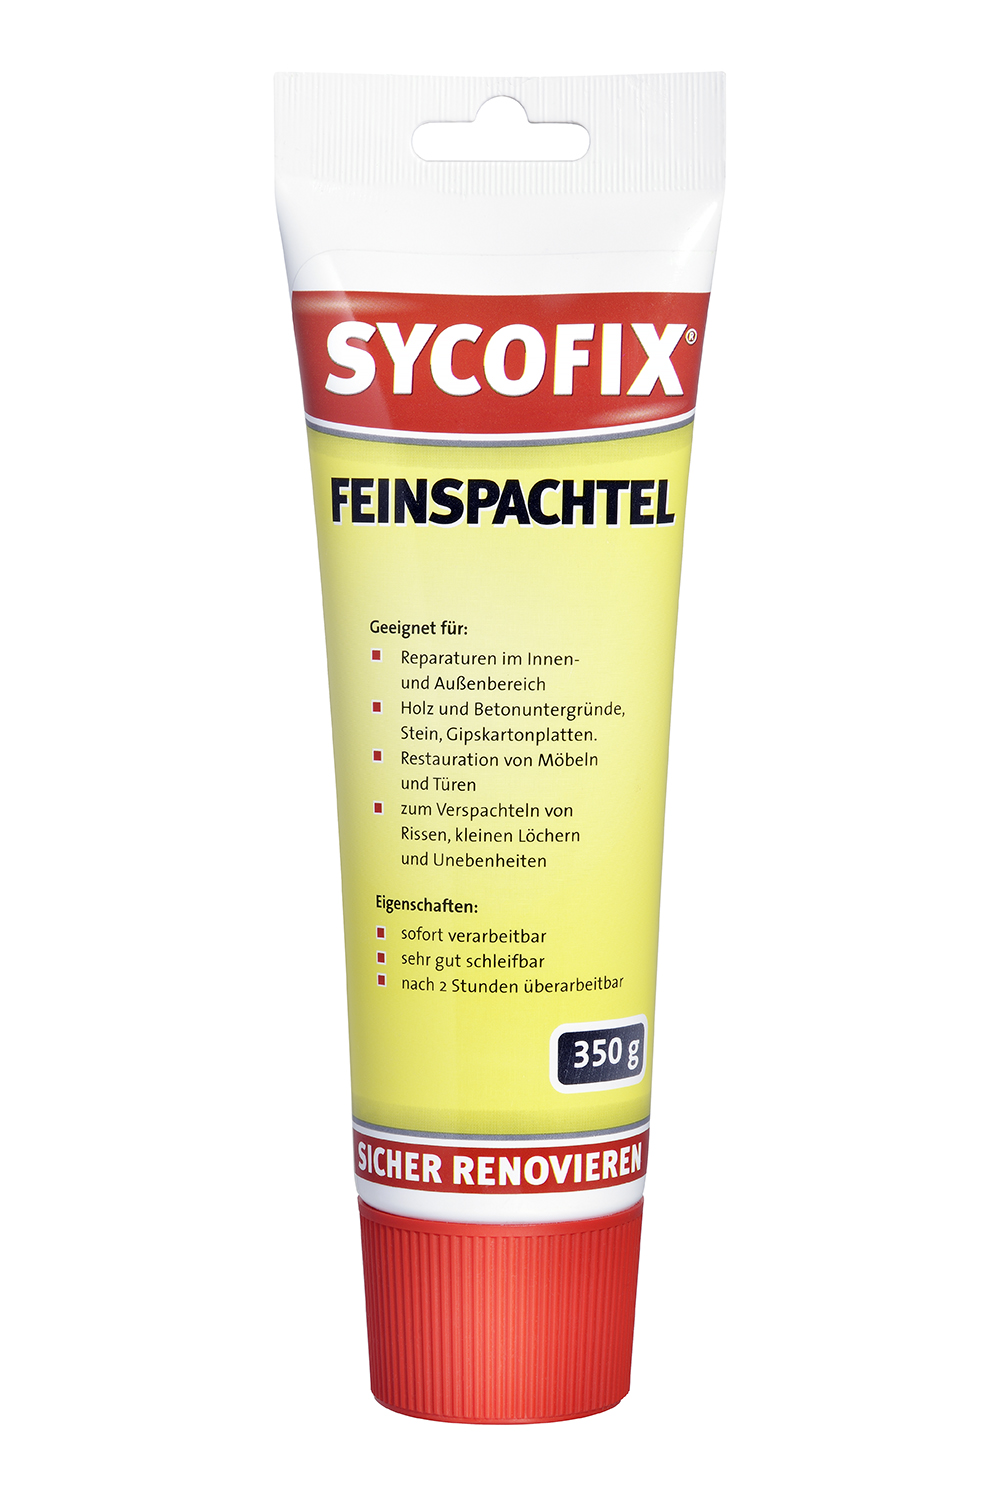 Sycofix Feinspachtel 350g